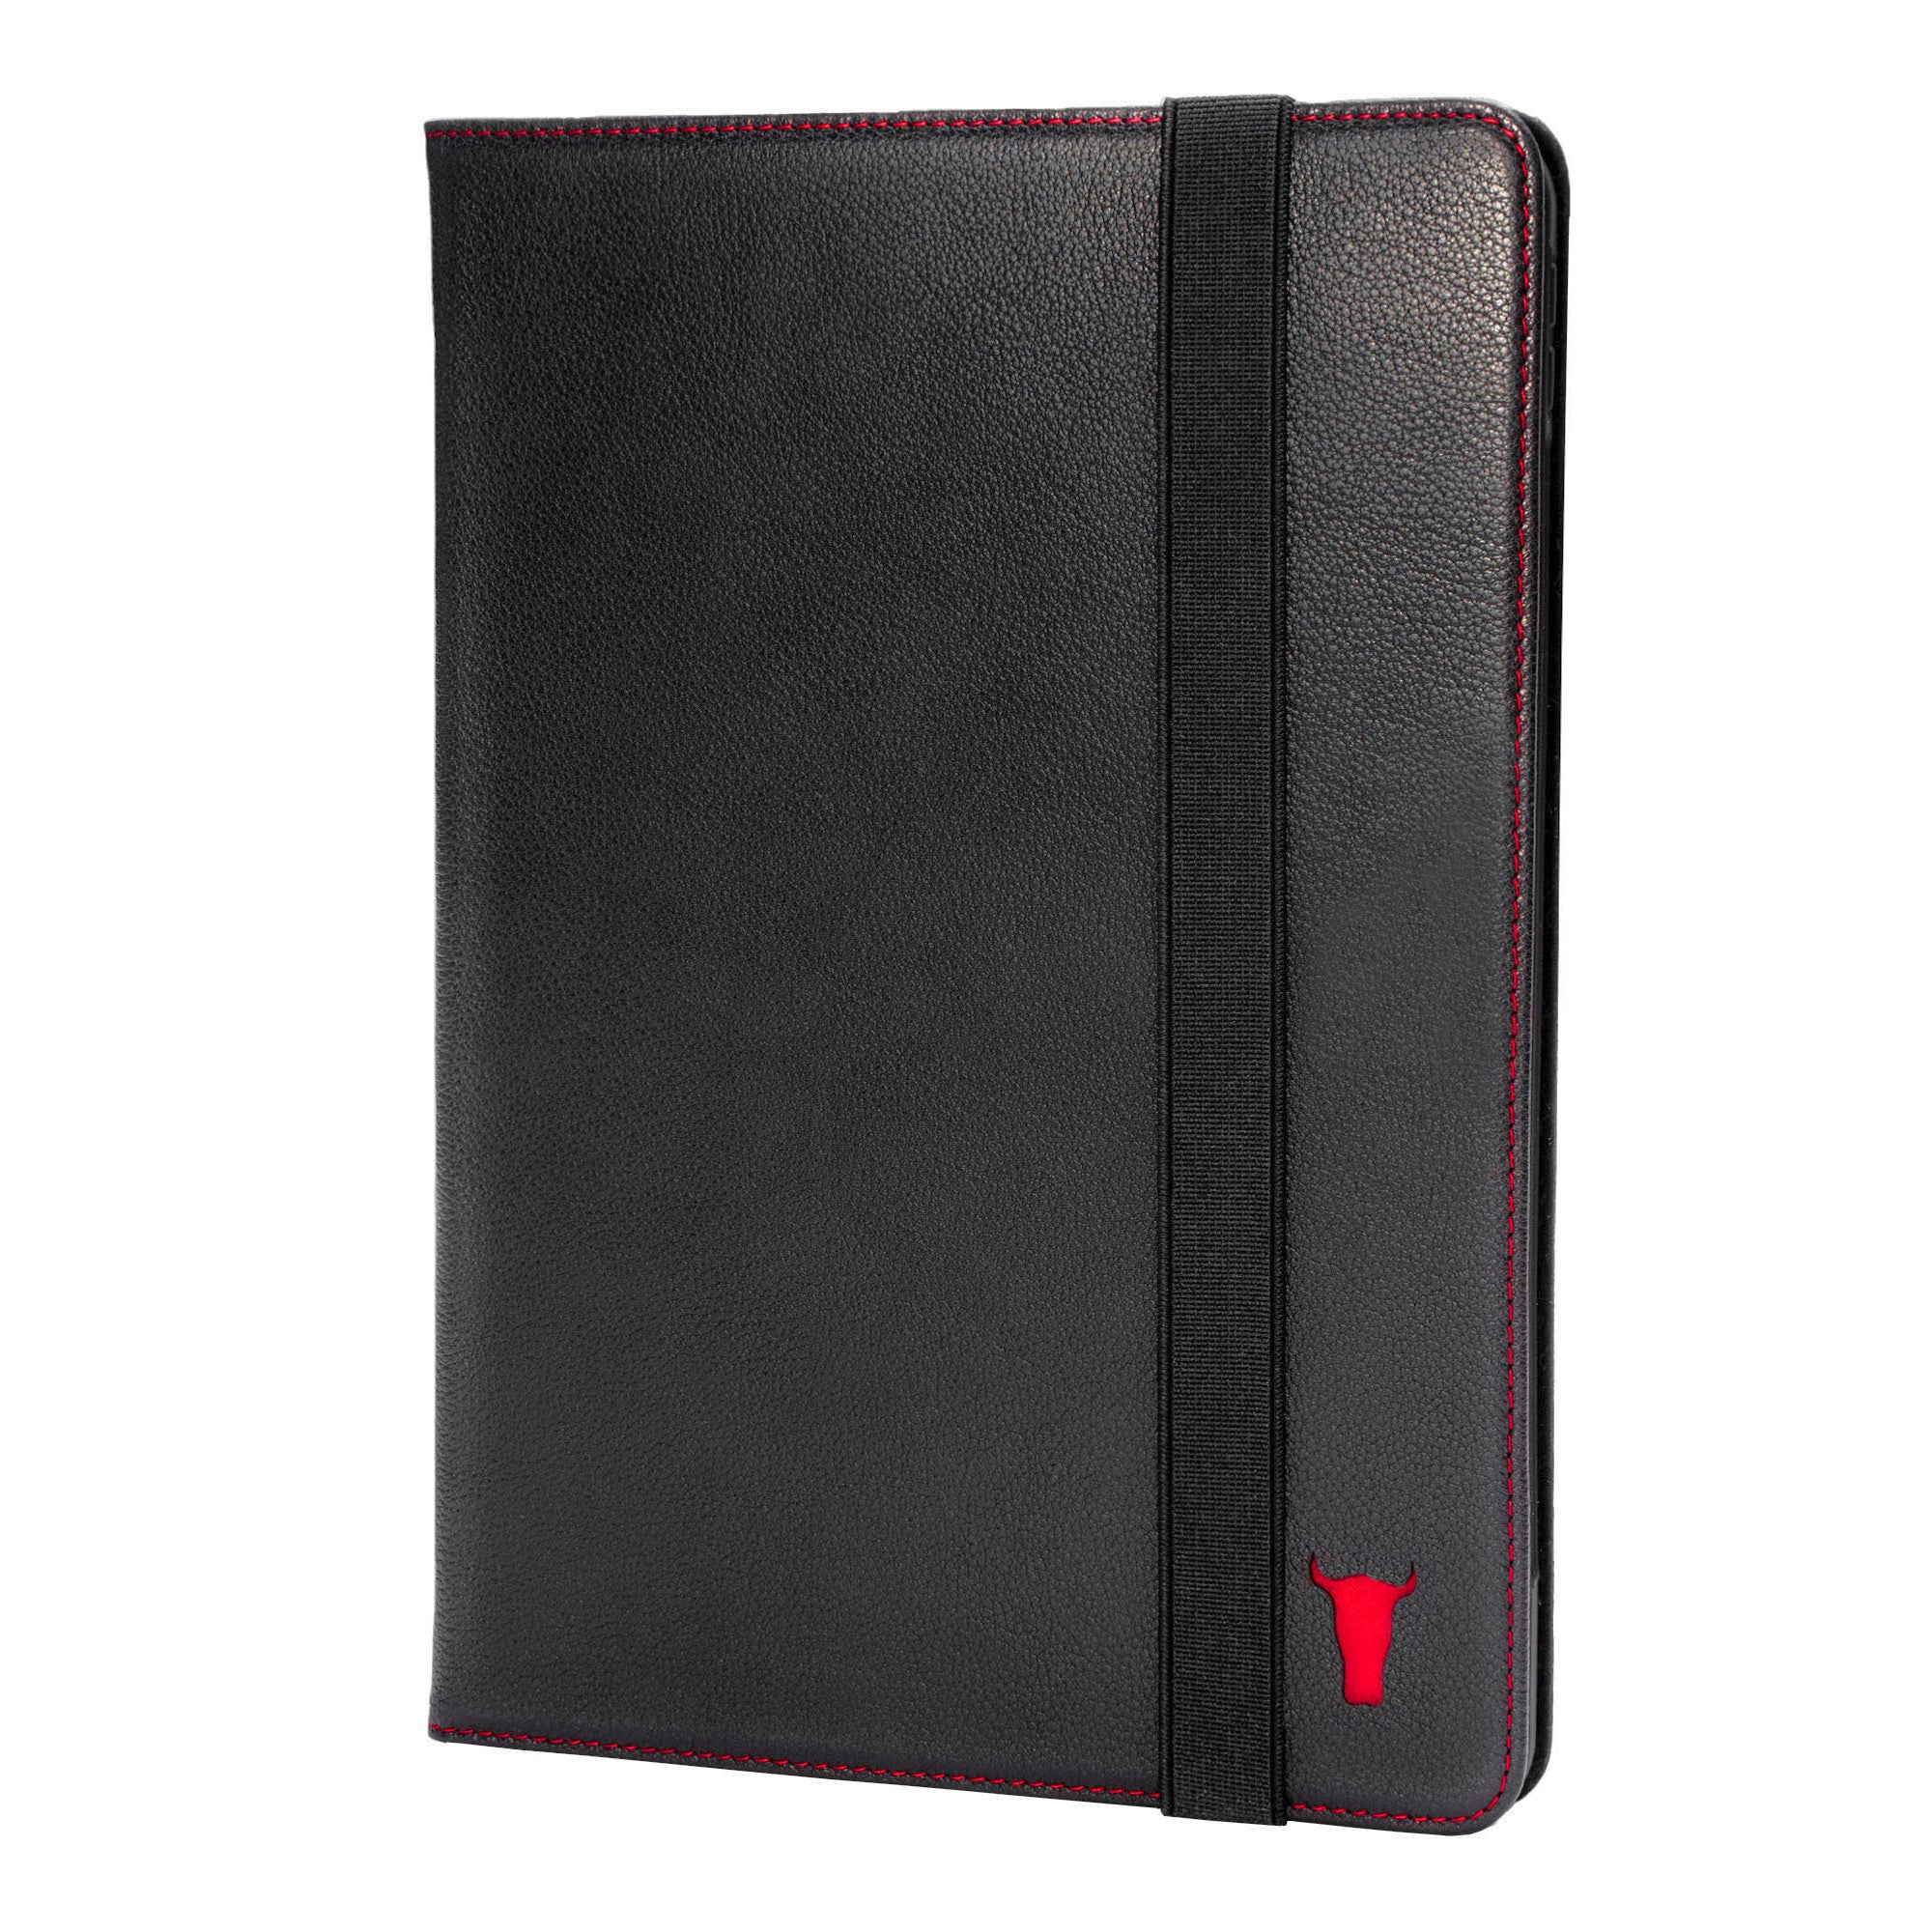 Premium Real Leather iPad Cases - Casemade USA